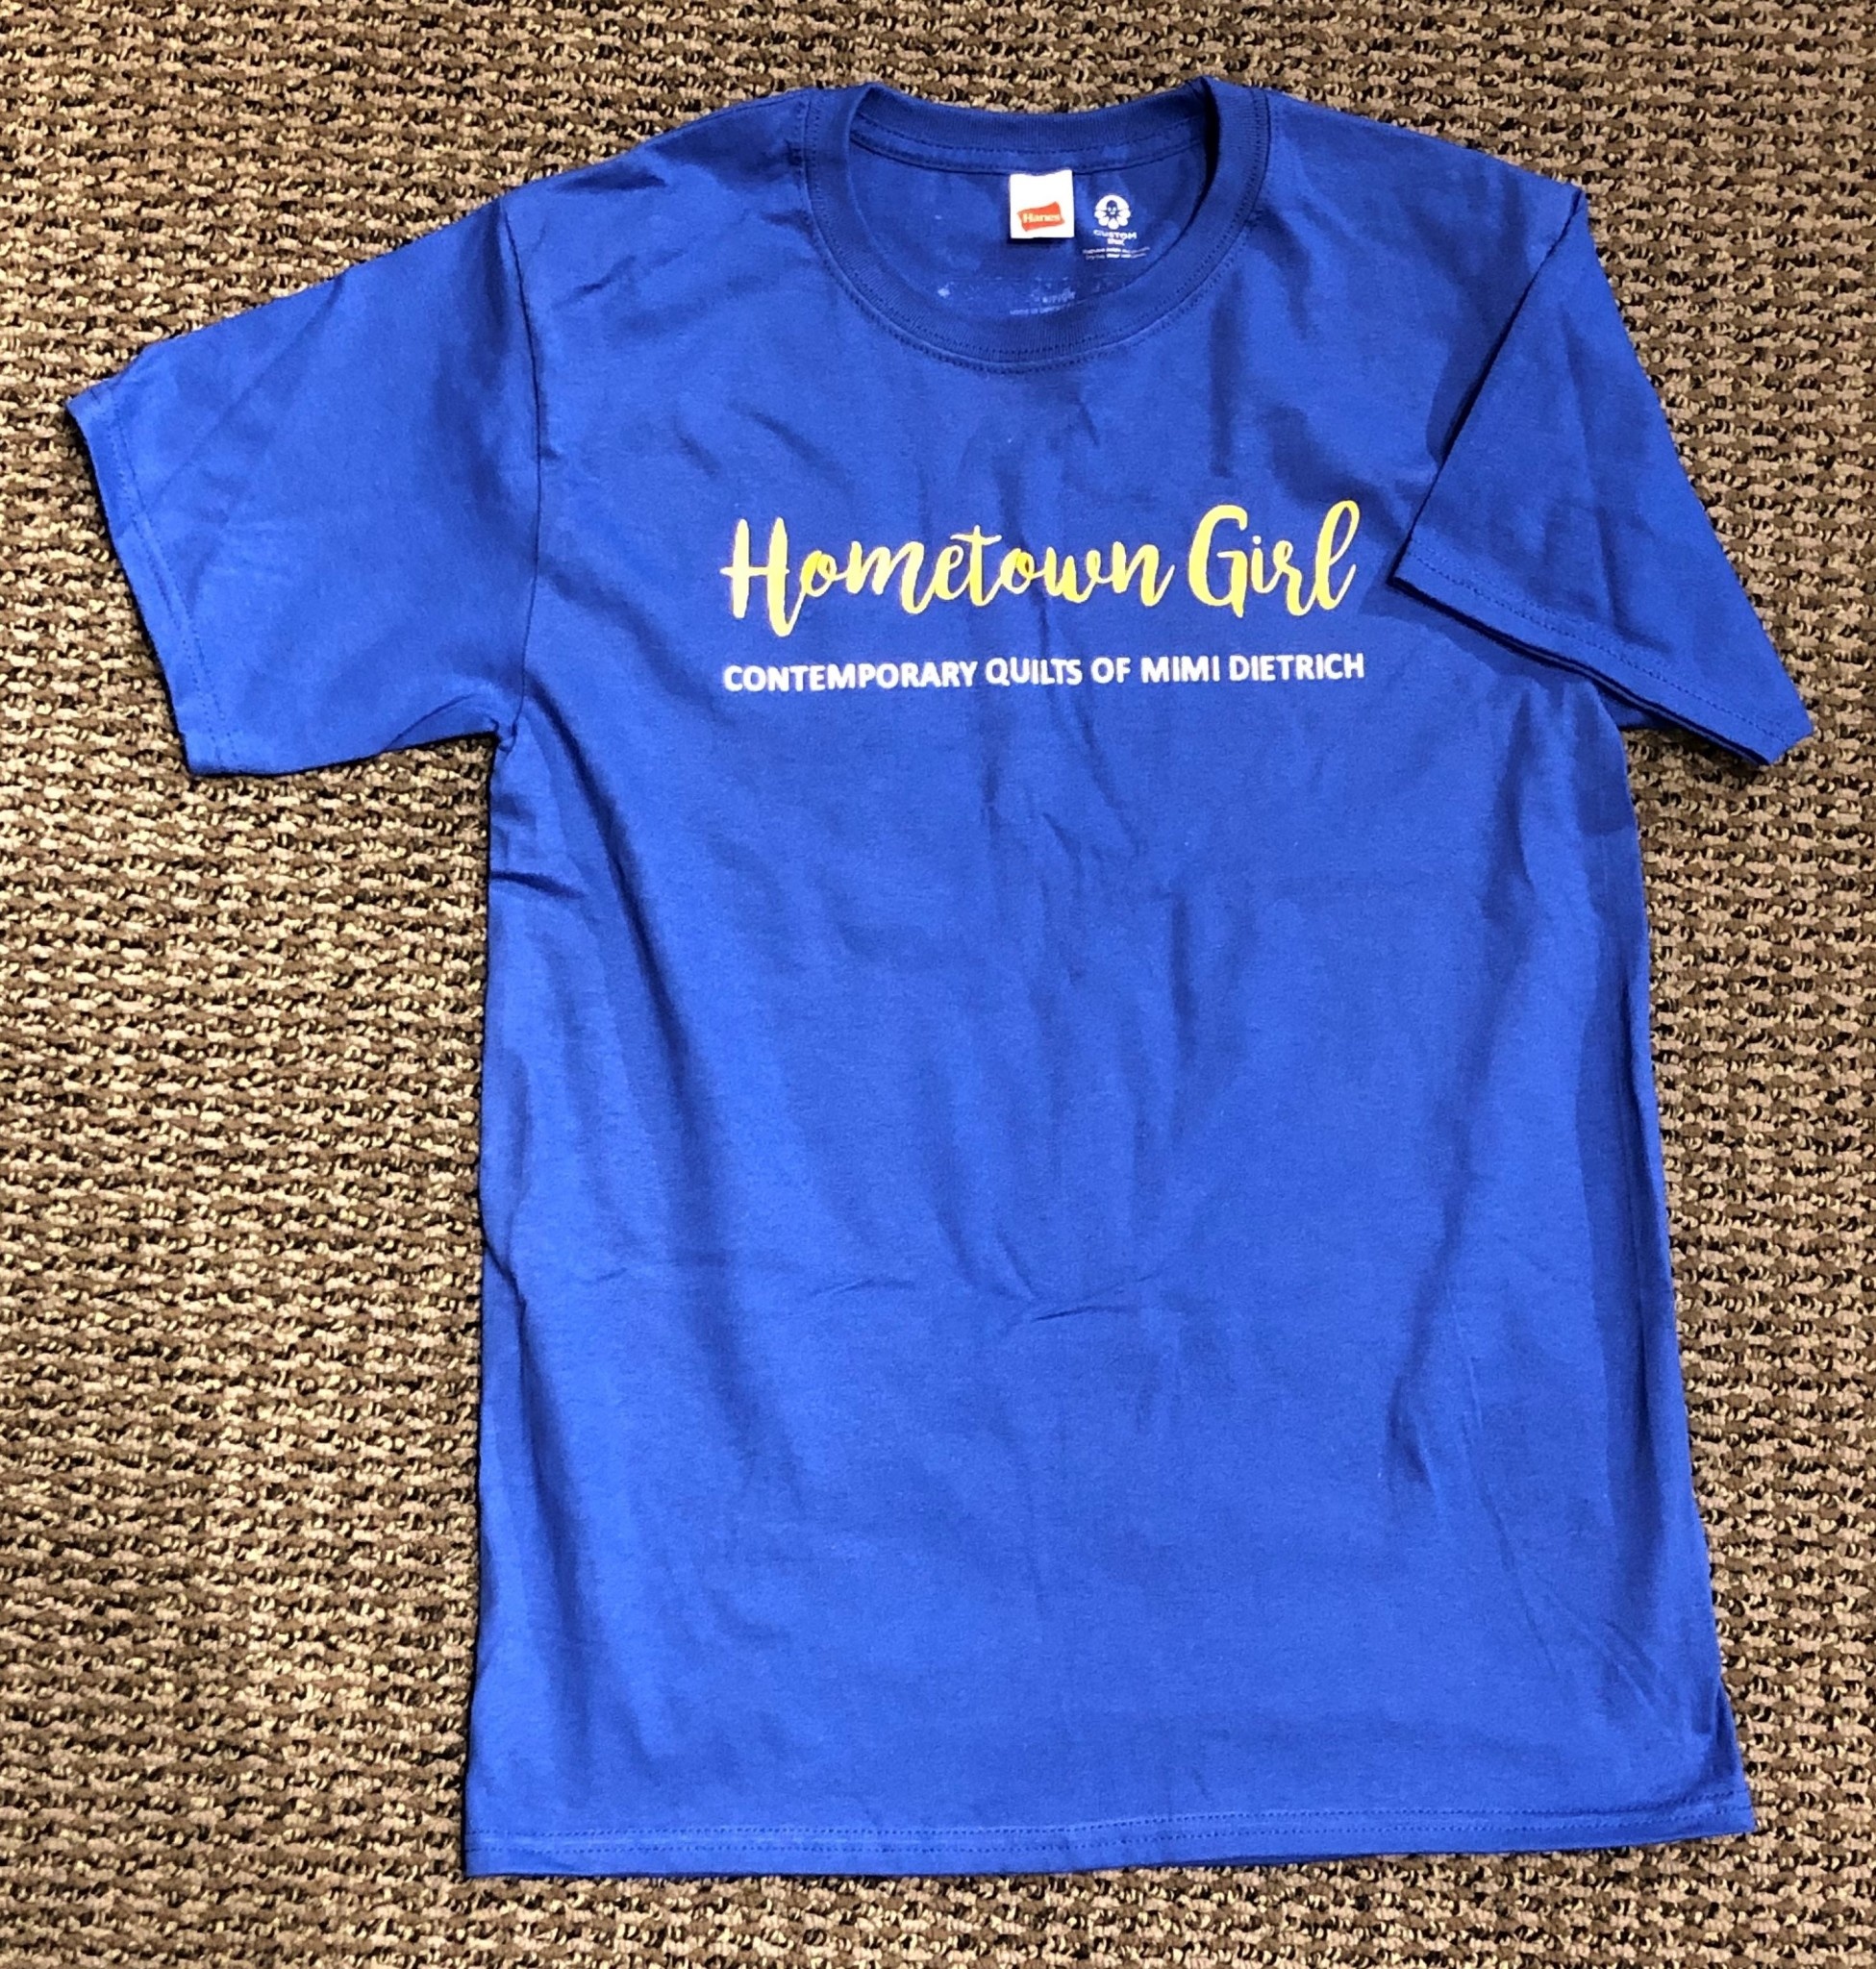 Hometown Girl Farewell Tour Commemorative T-shirt